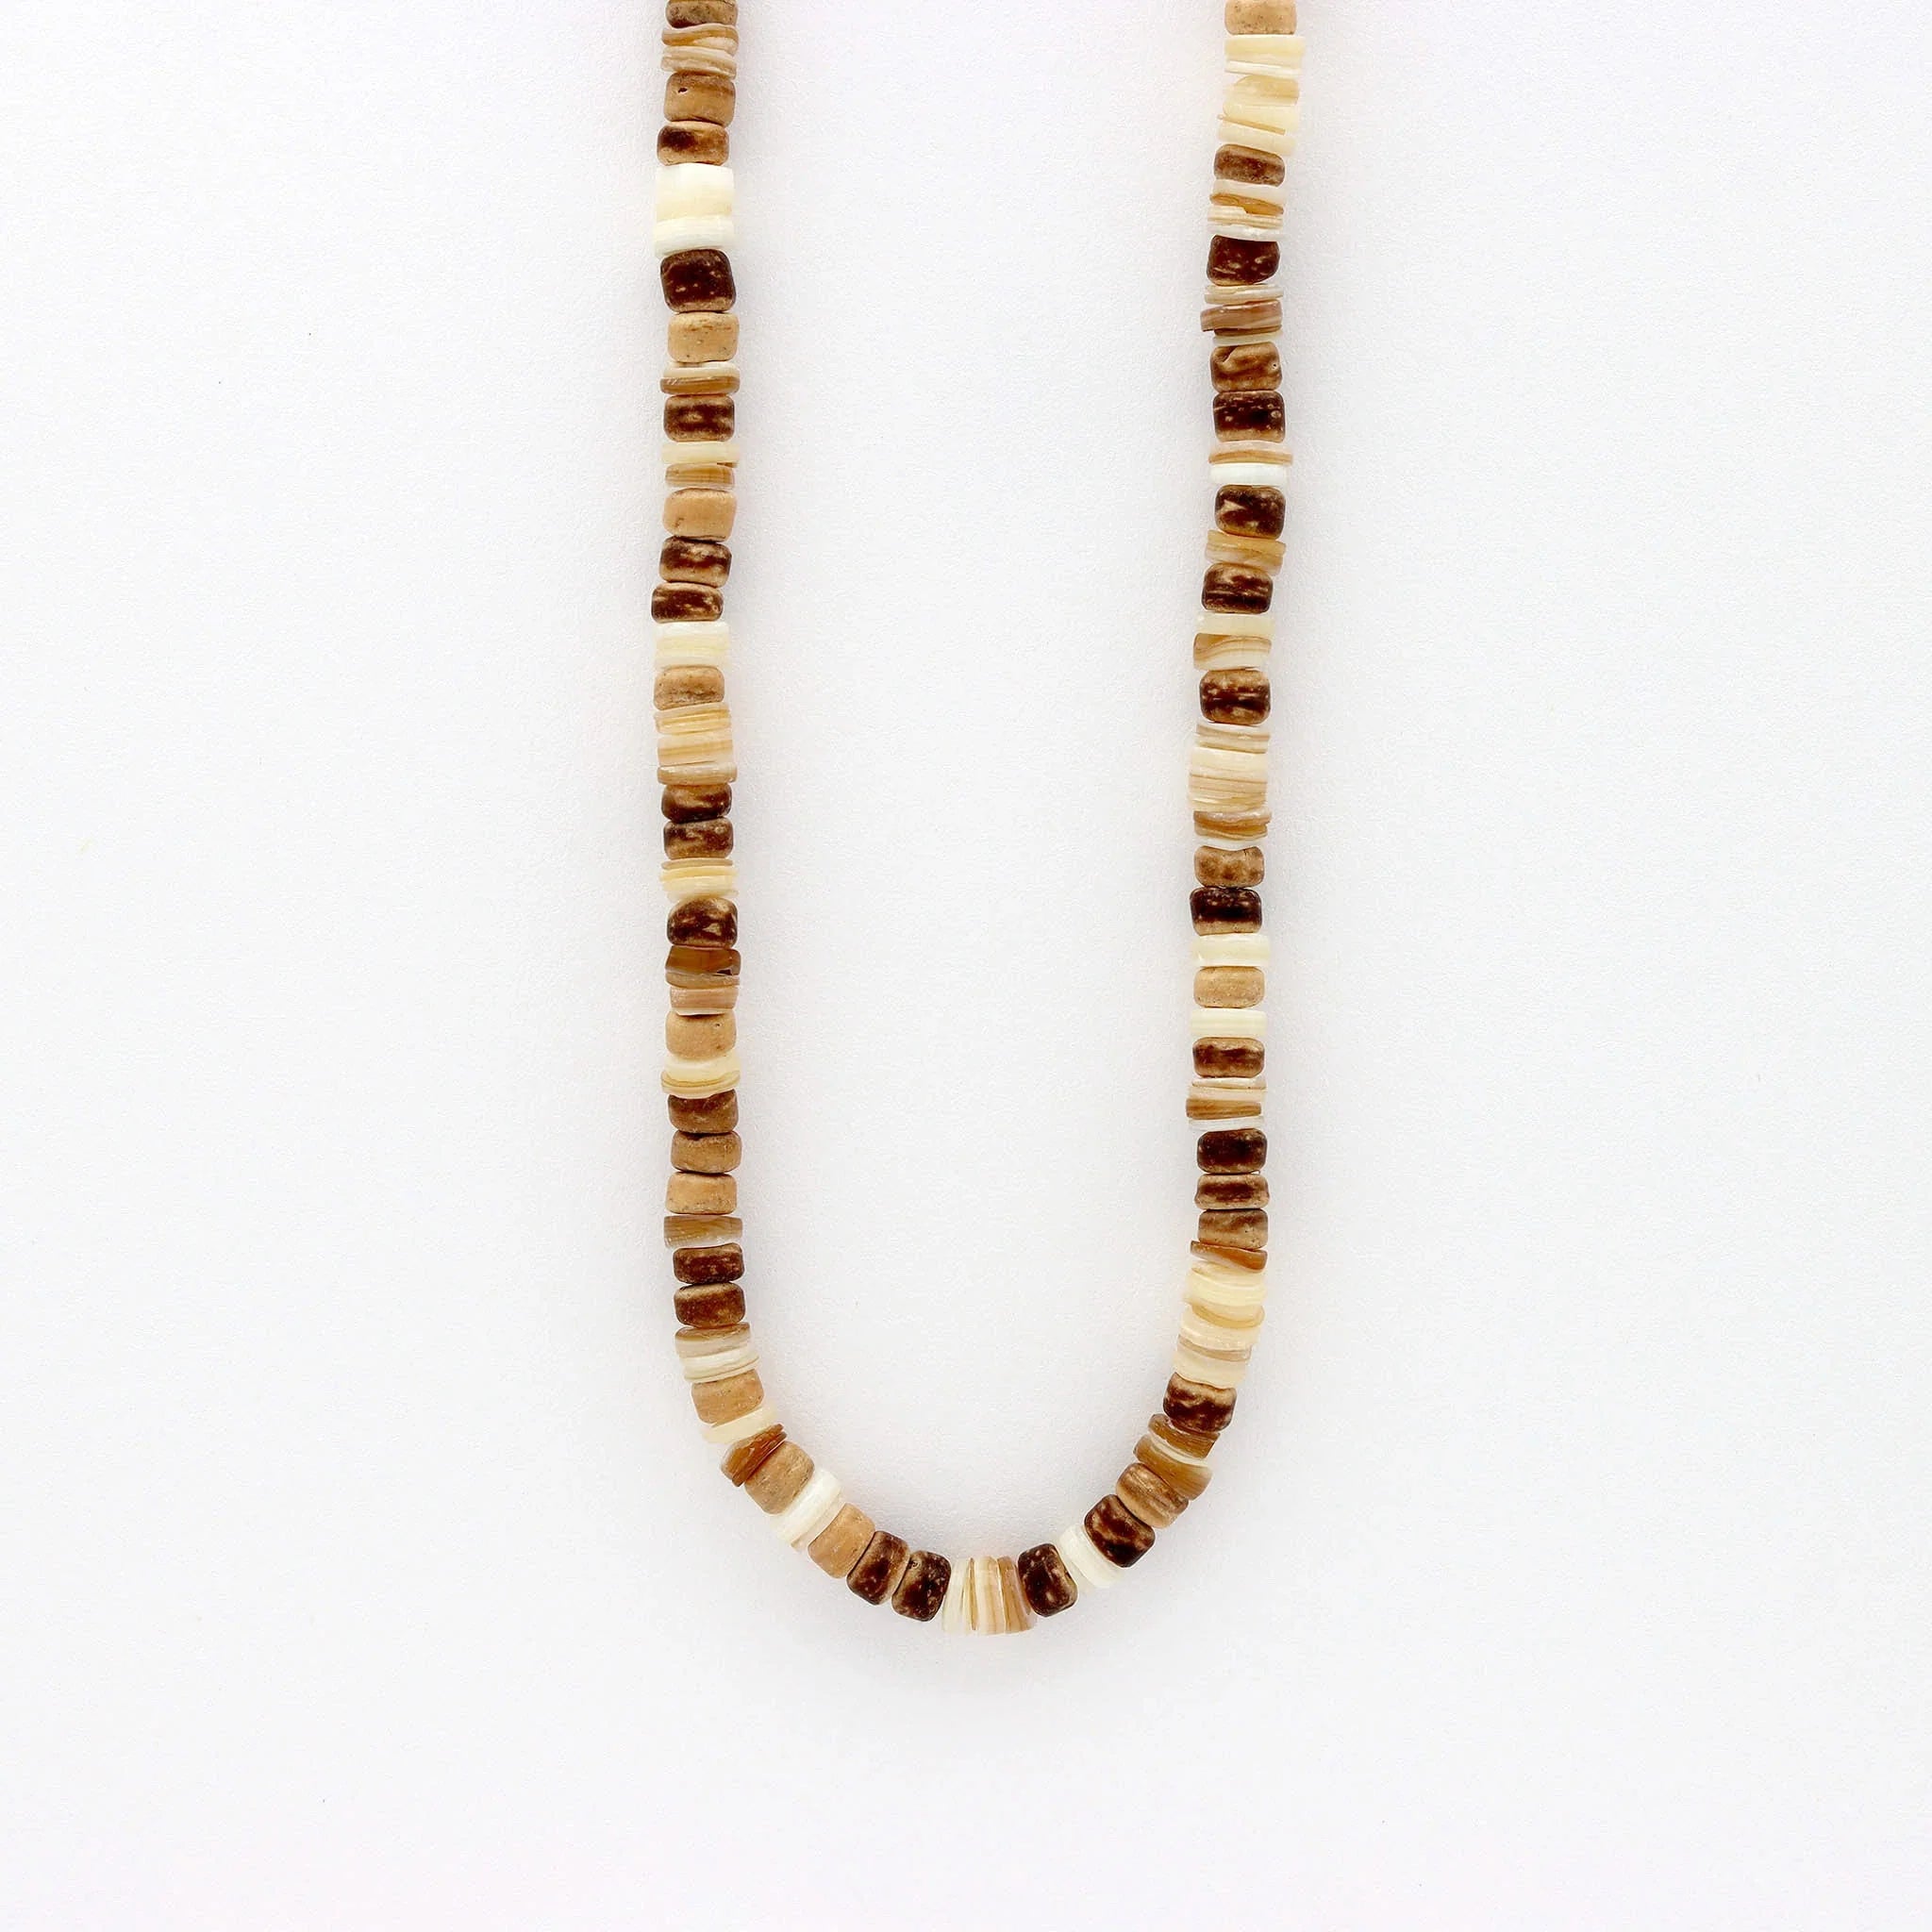 Nusa Lembongan Wood Bead Necklace - Pineapple Island